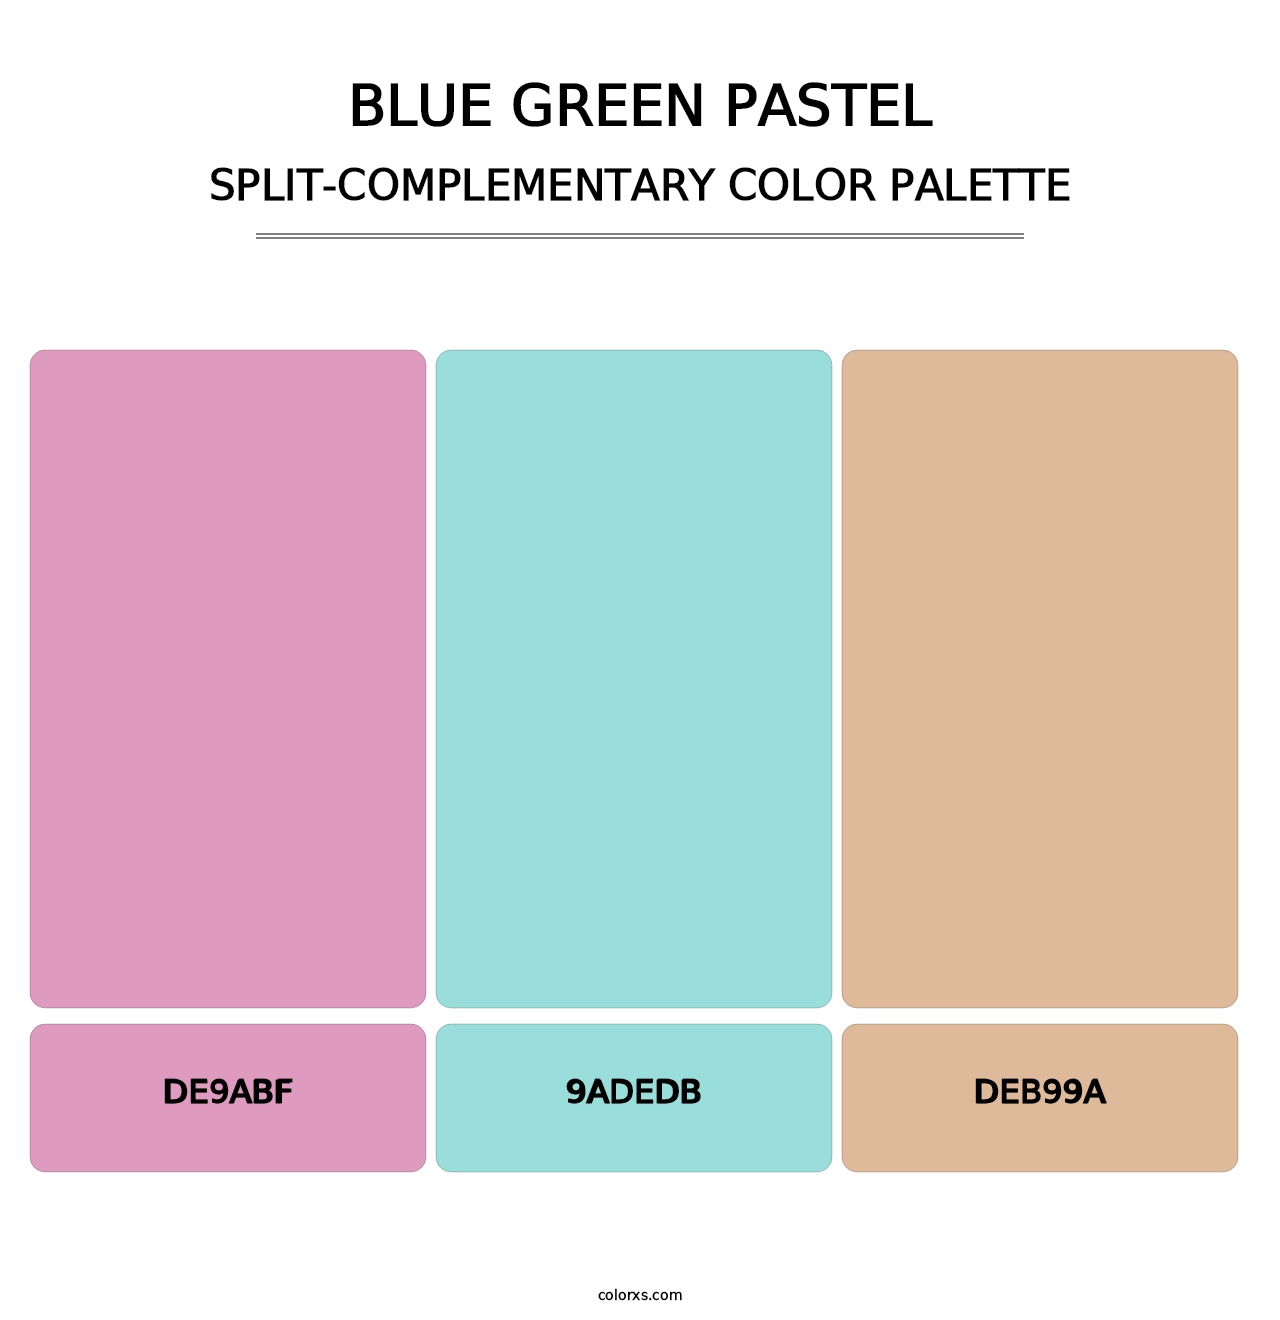 Blue Green Pastel - Split-Complementary Color Palette